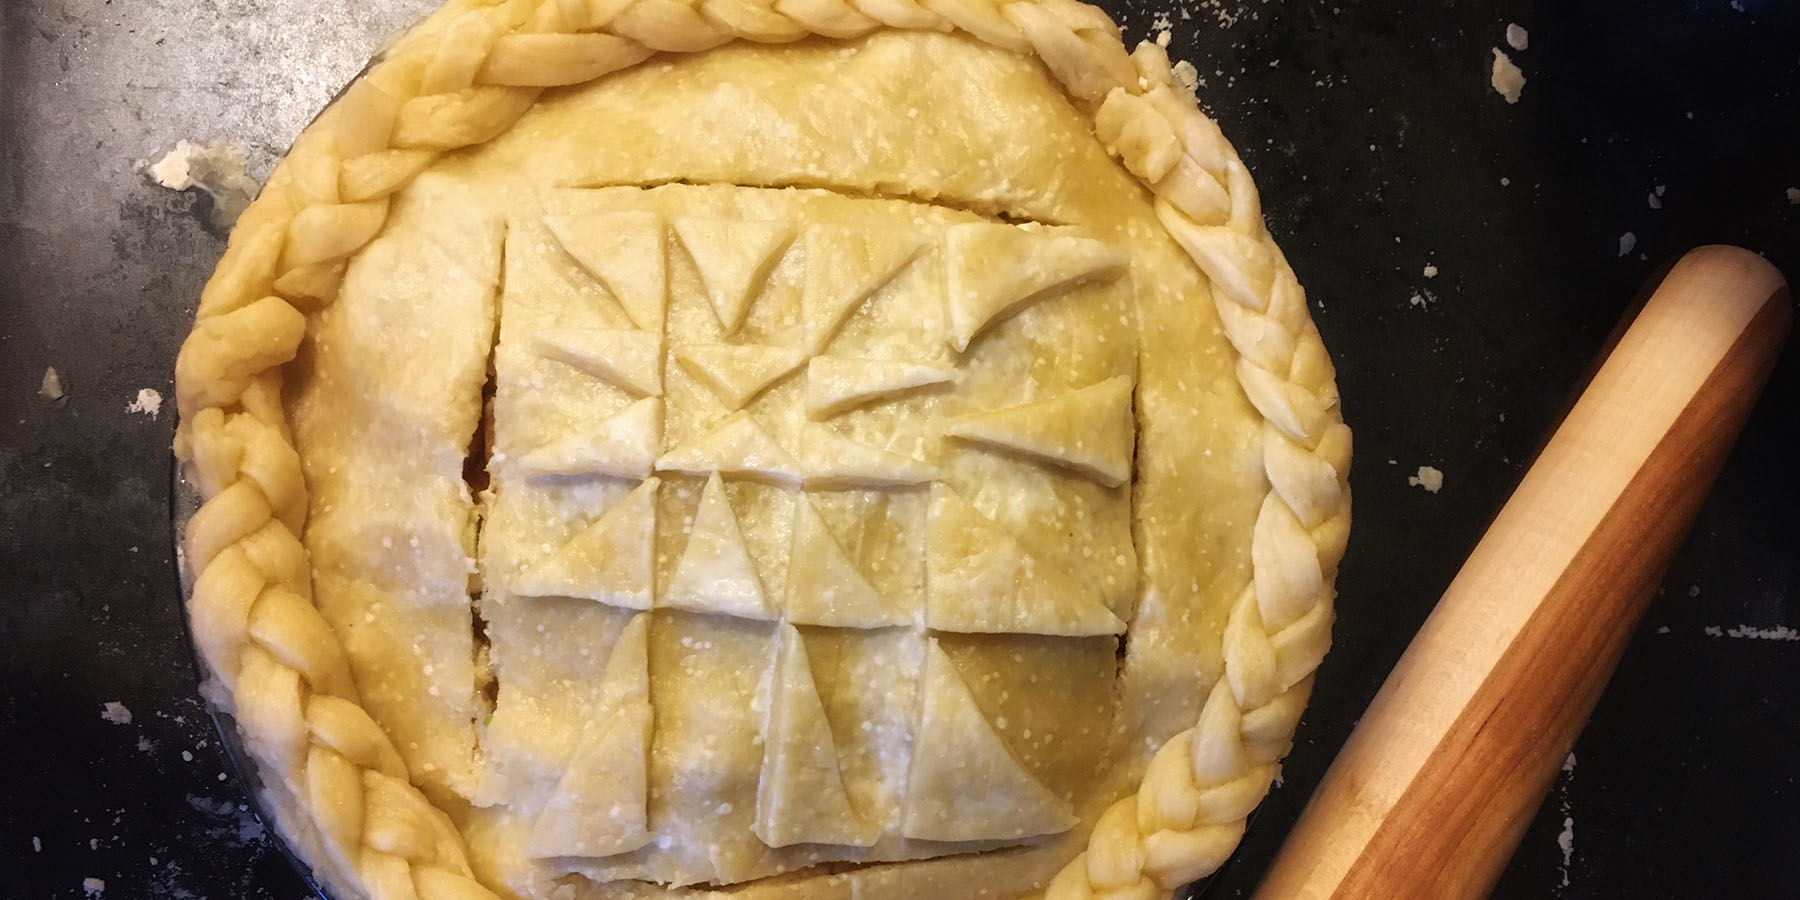 In Pie Crust, I Trust